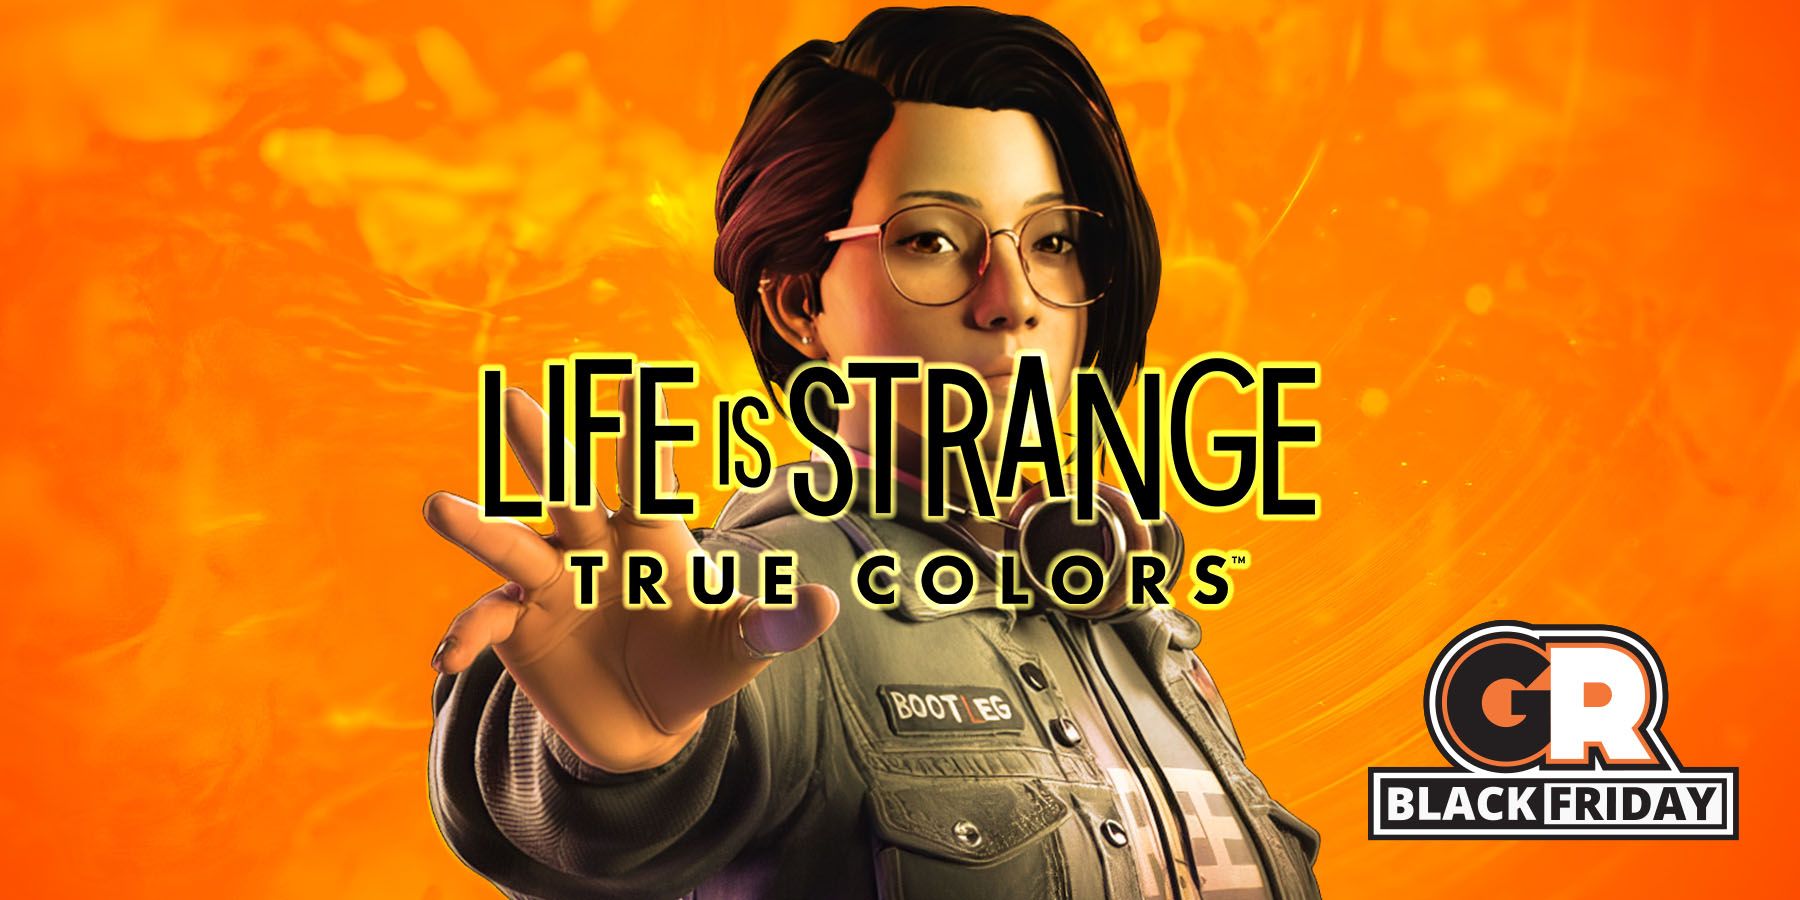 life-is-strange-true-colors-gamerant-amazon-black-friday-deals-feature